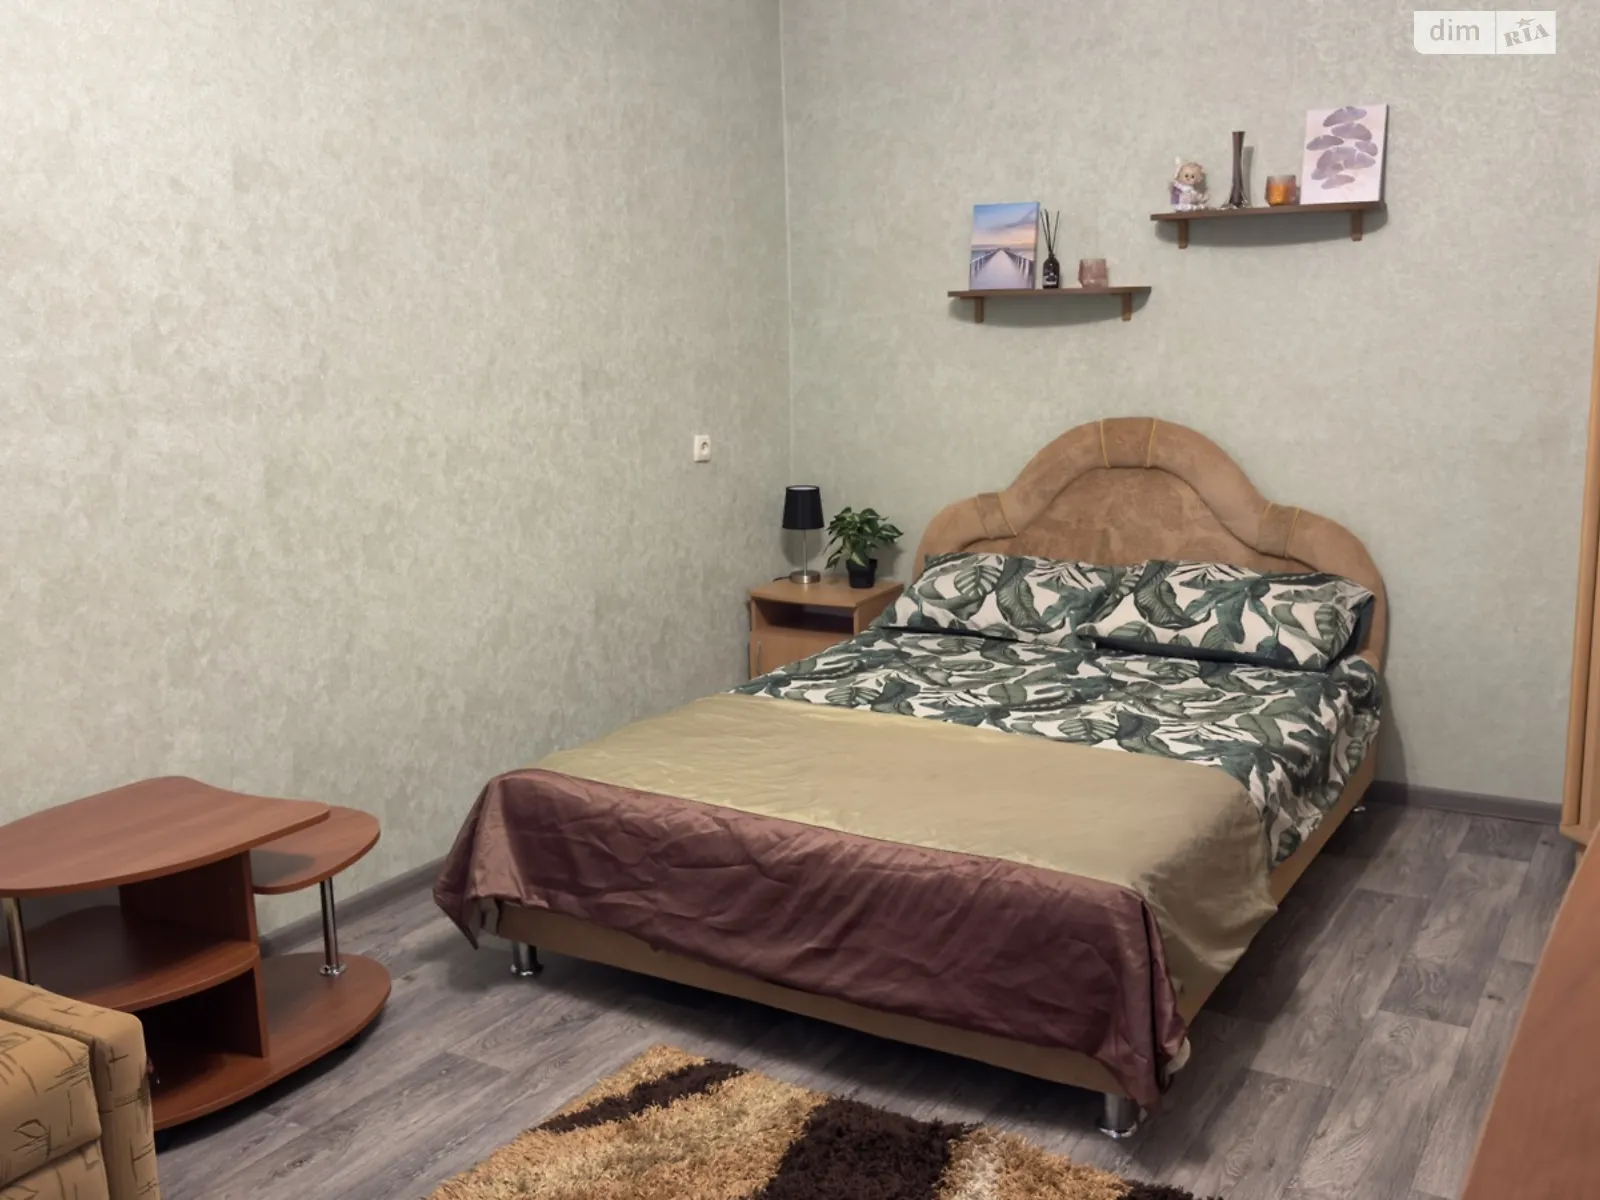 1-кімнатна квартира у Запоріжжі, цена: 1000 грн